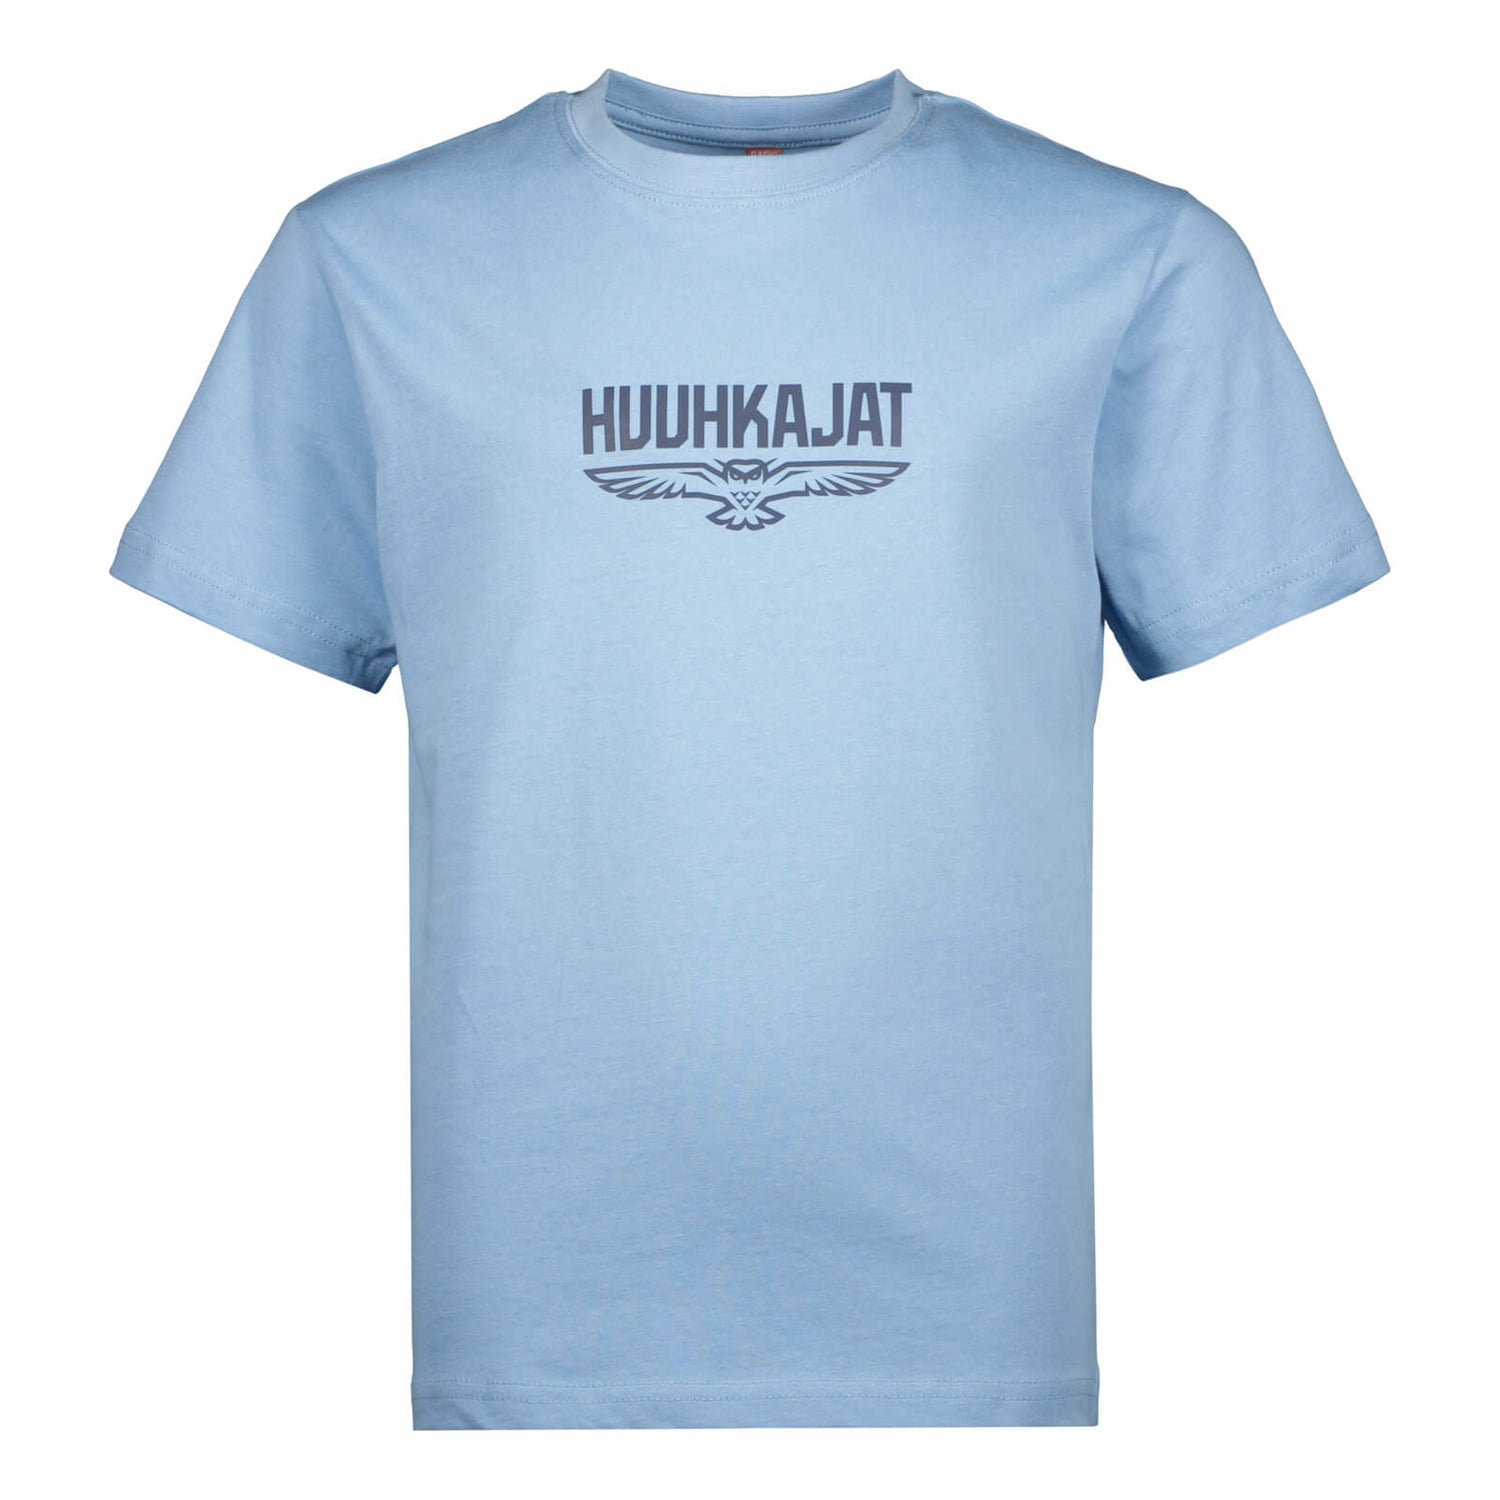 Huuhkajat 2.0 Cotton T-Shirt, Kids, Light Blue